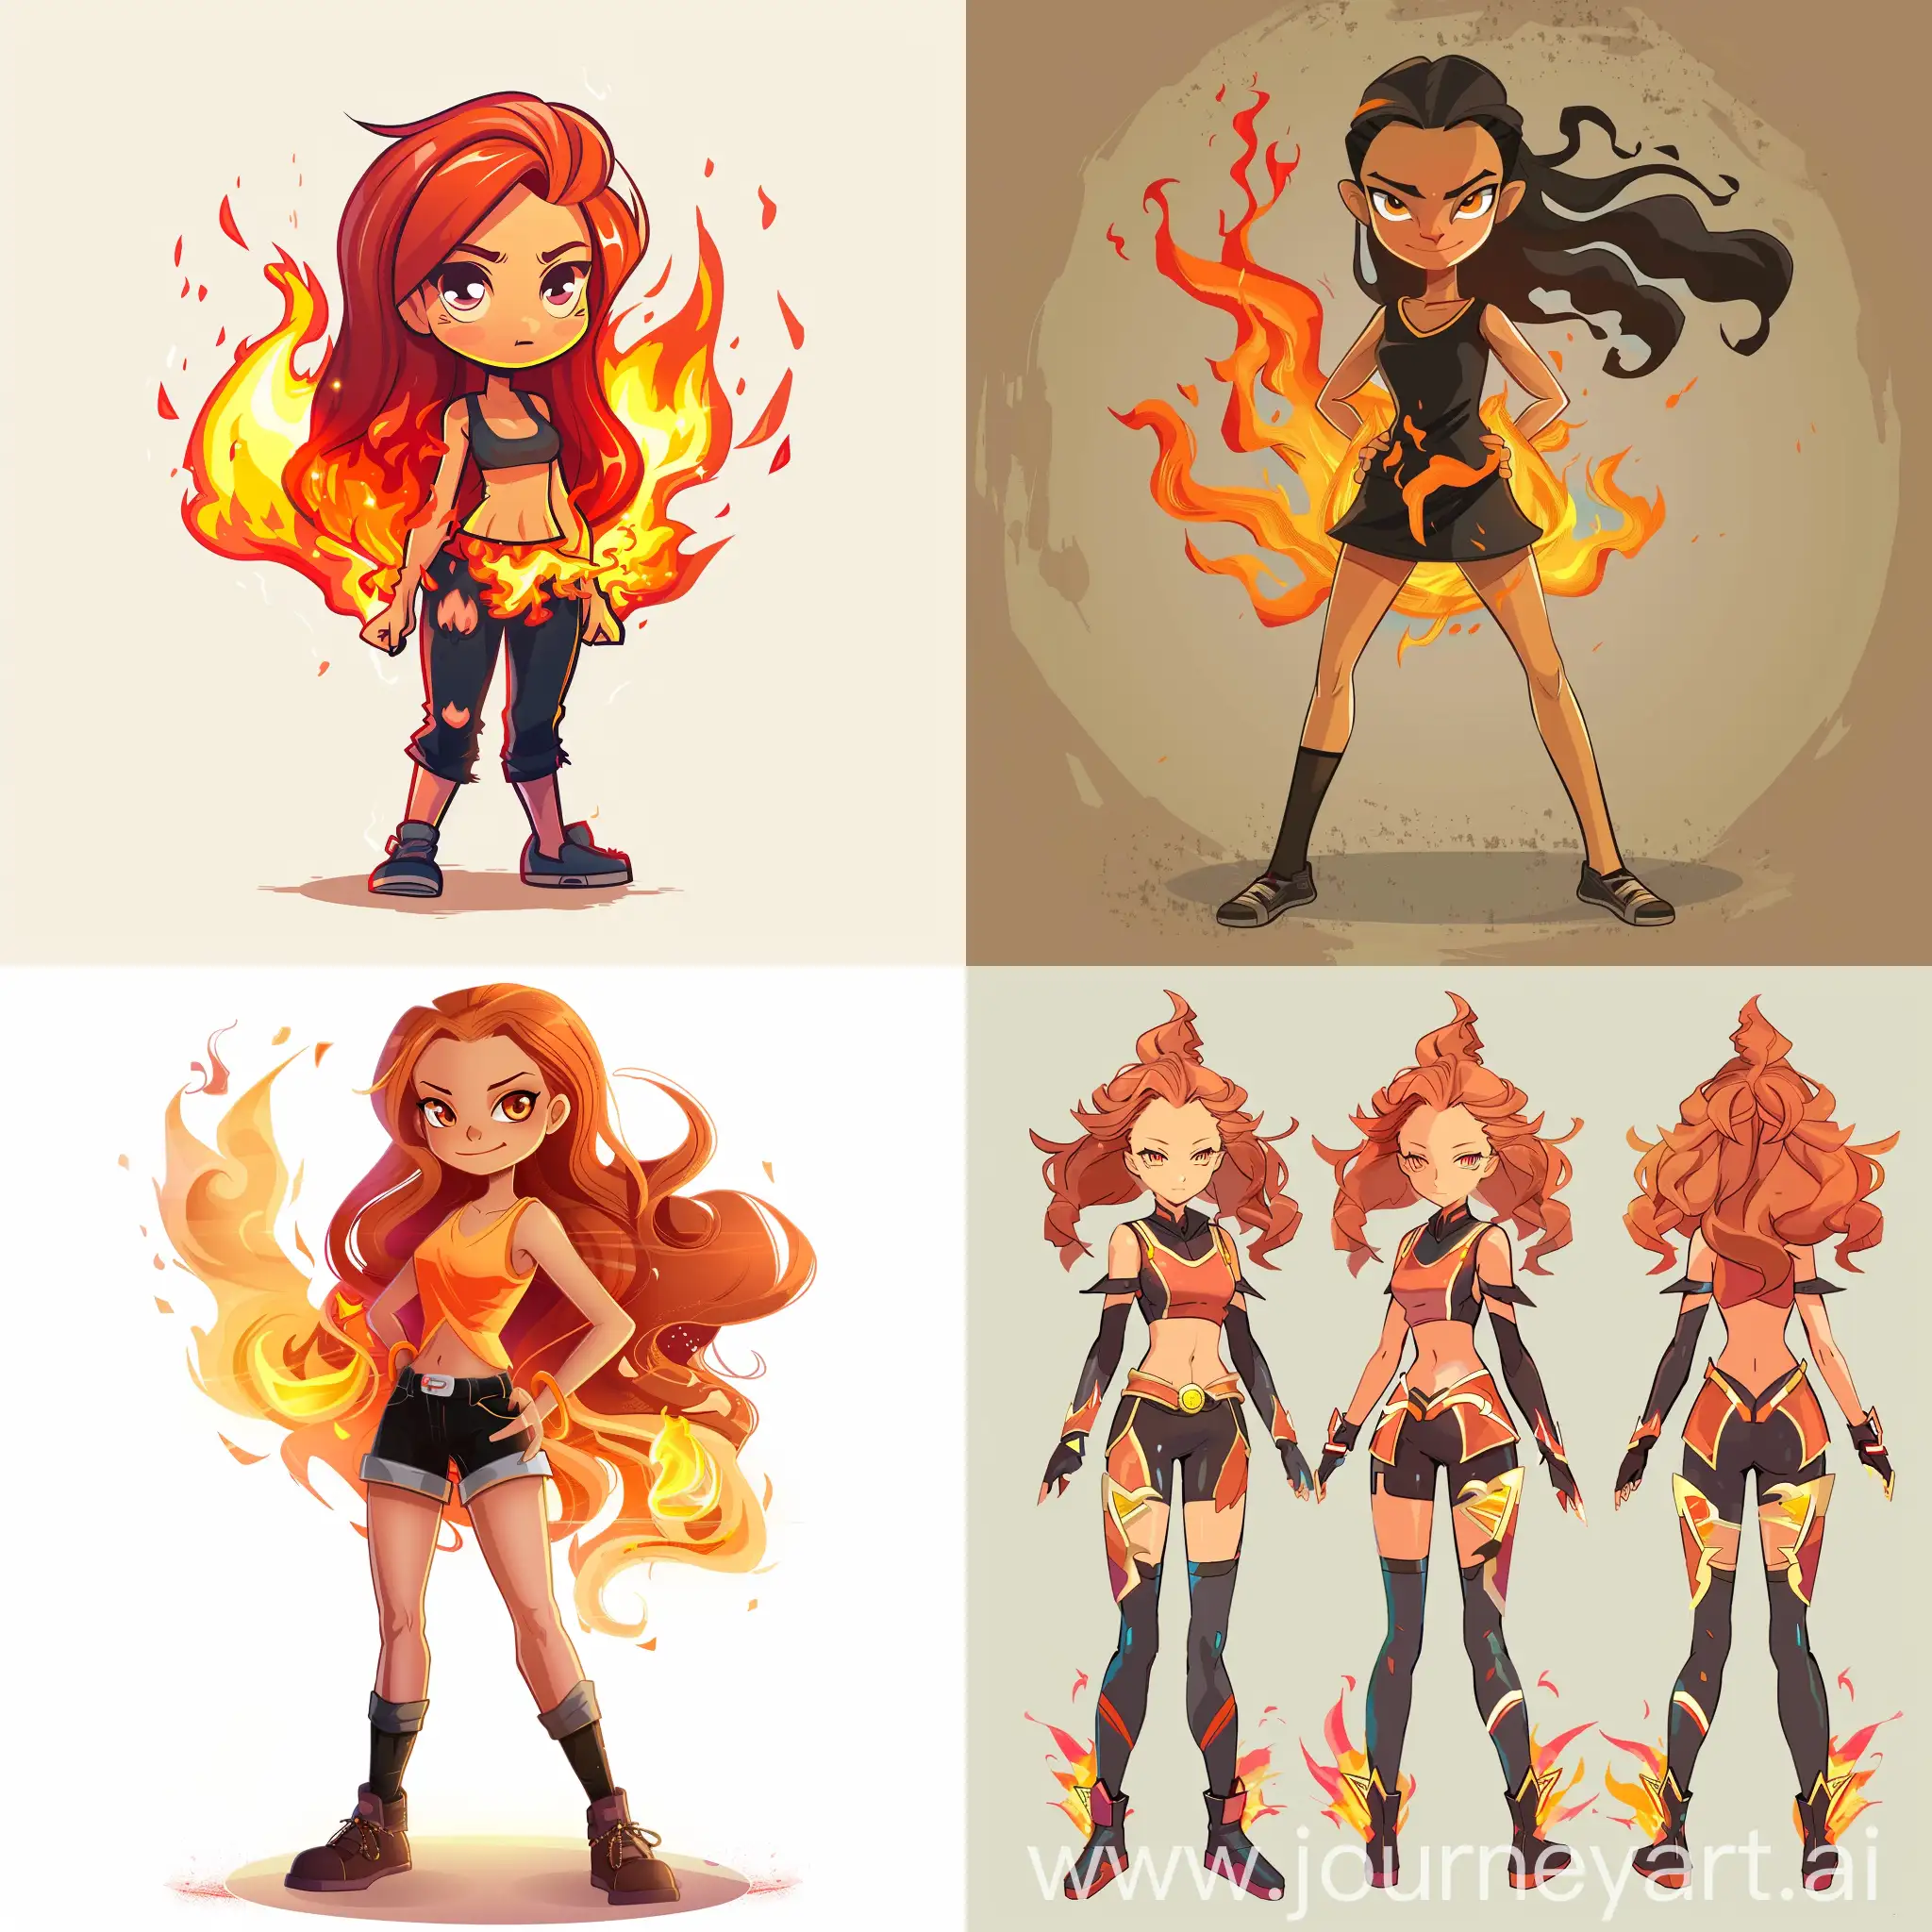 Heroic-Fire-Element-Girl-Spirited-Cartoon-Character-in-Full-Bloom